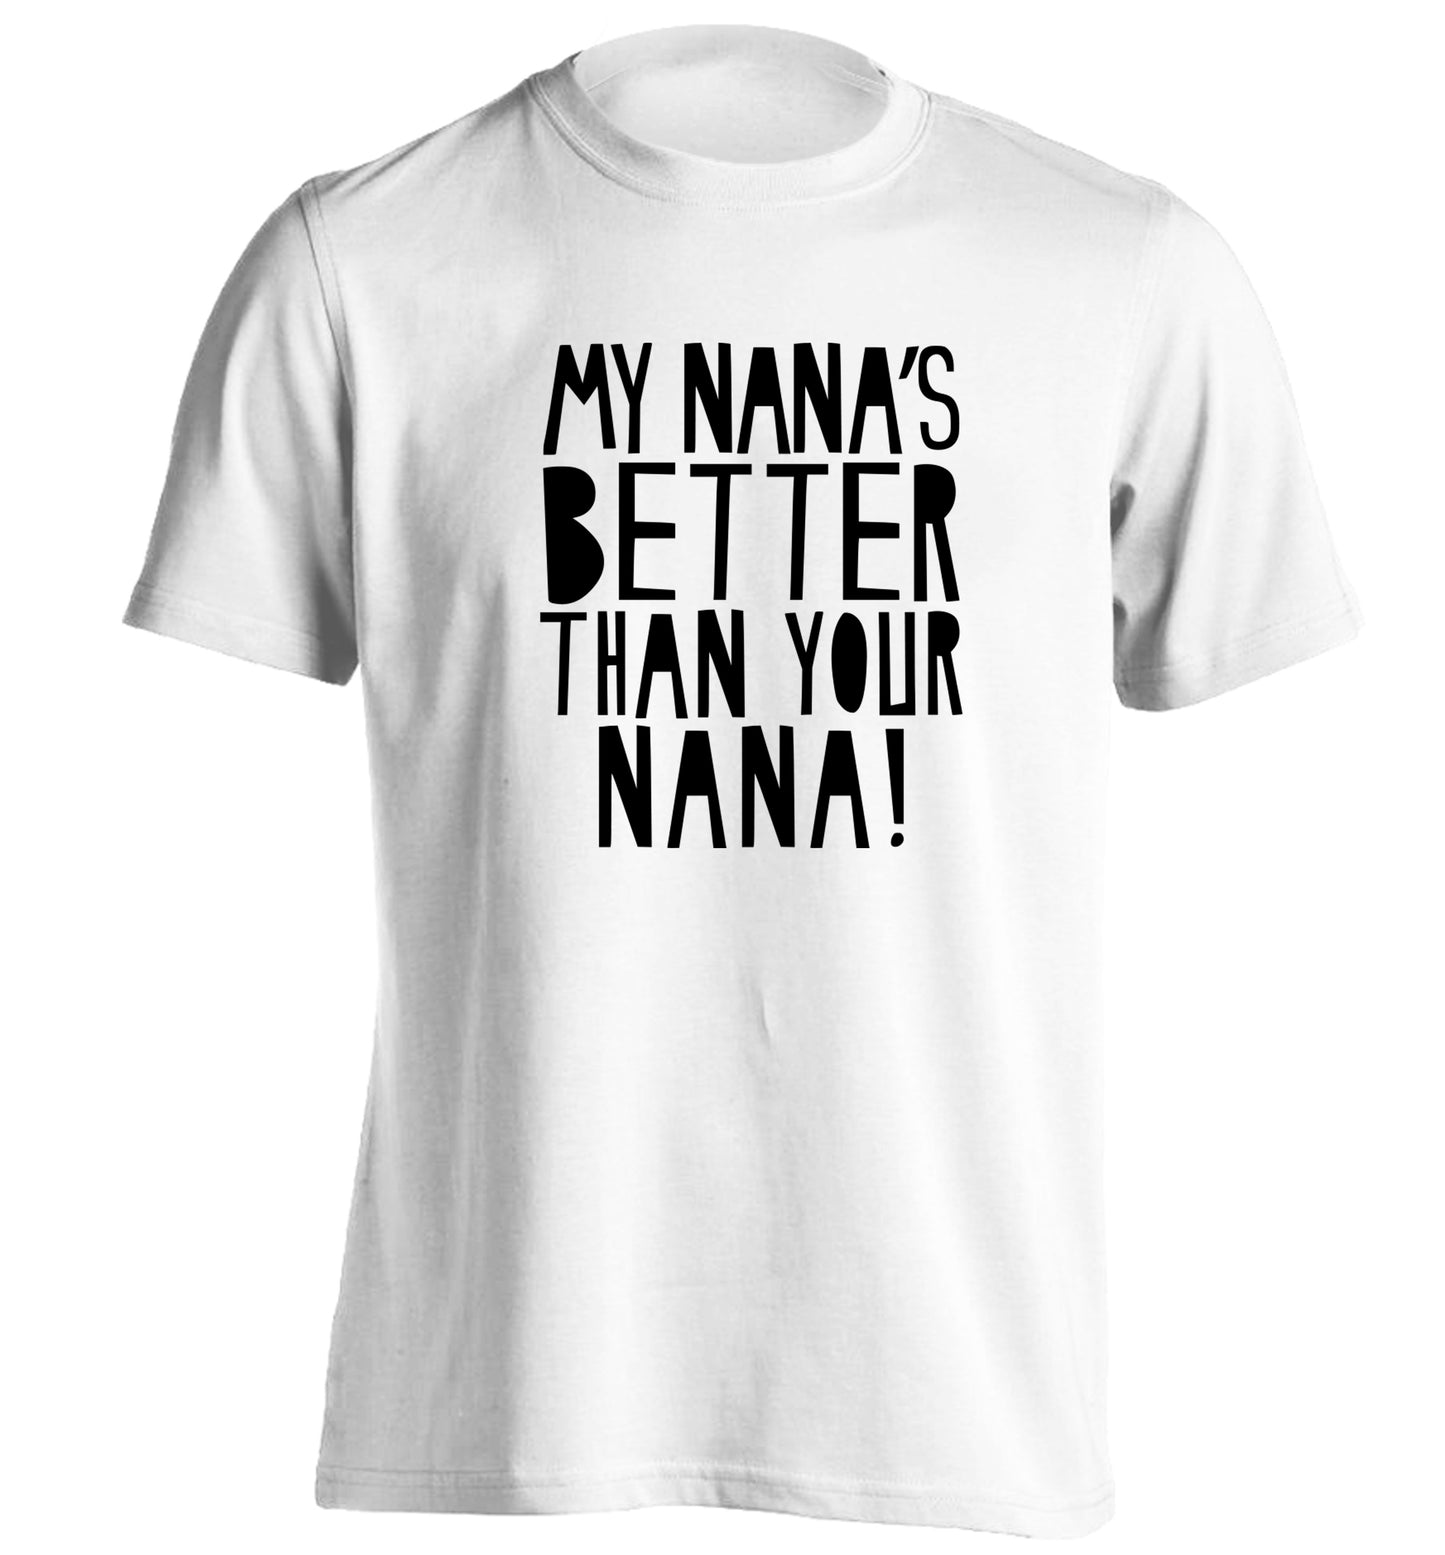 My nana's better than your nana adults unisex white Tshirt 2XL